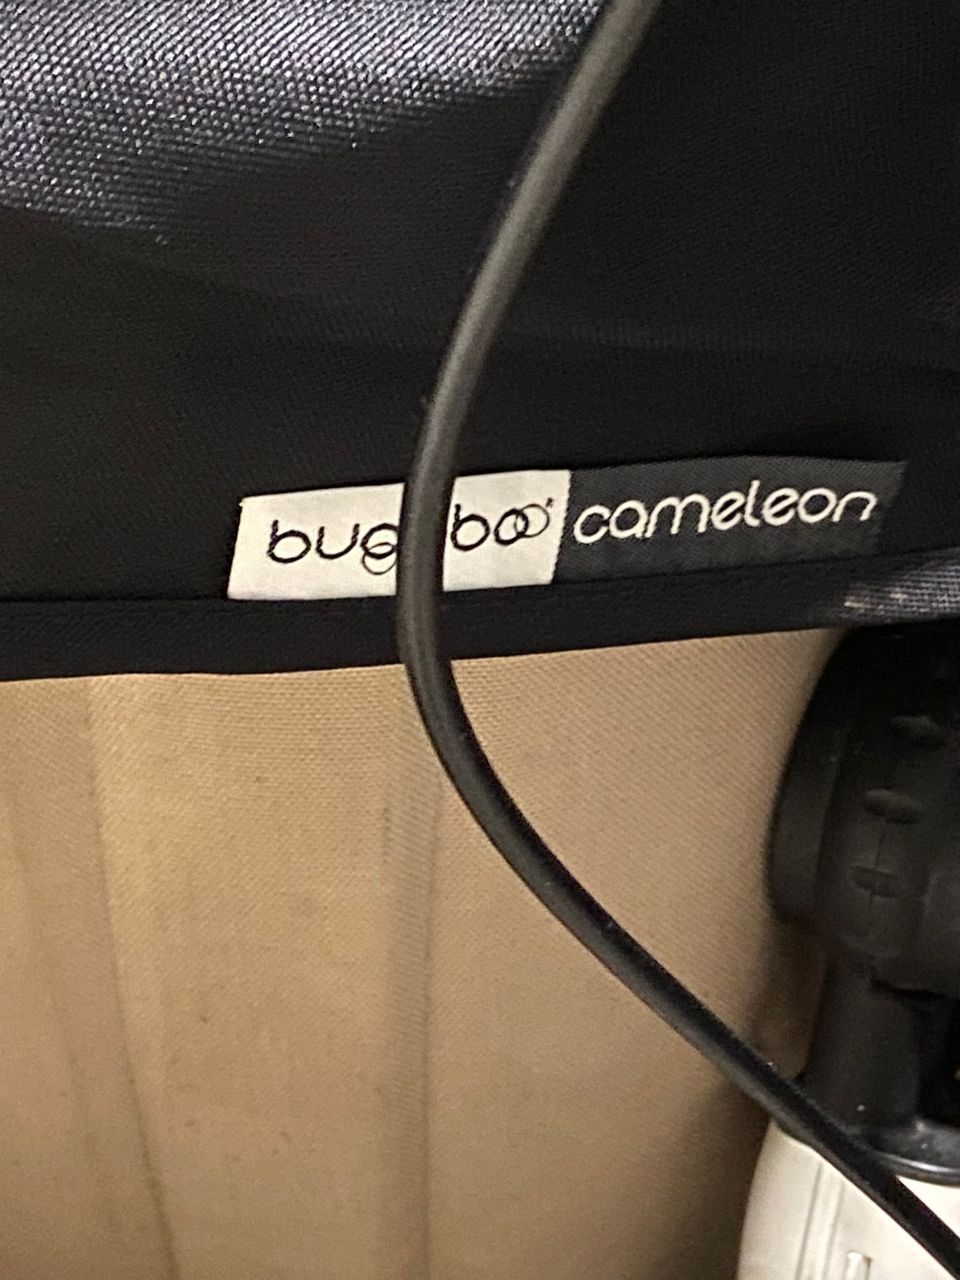 Bugaboo Cameleon weels - all 4 weels + 2 non-winter weels